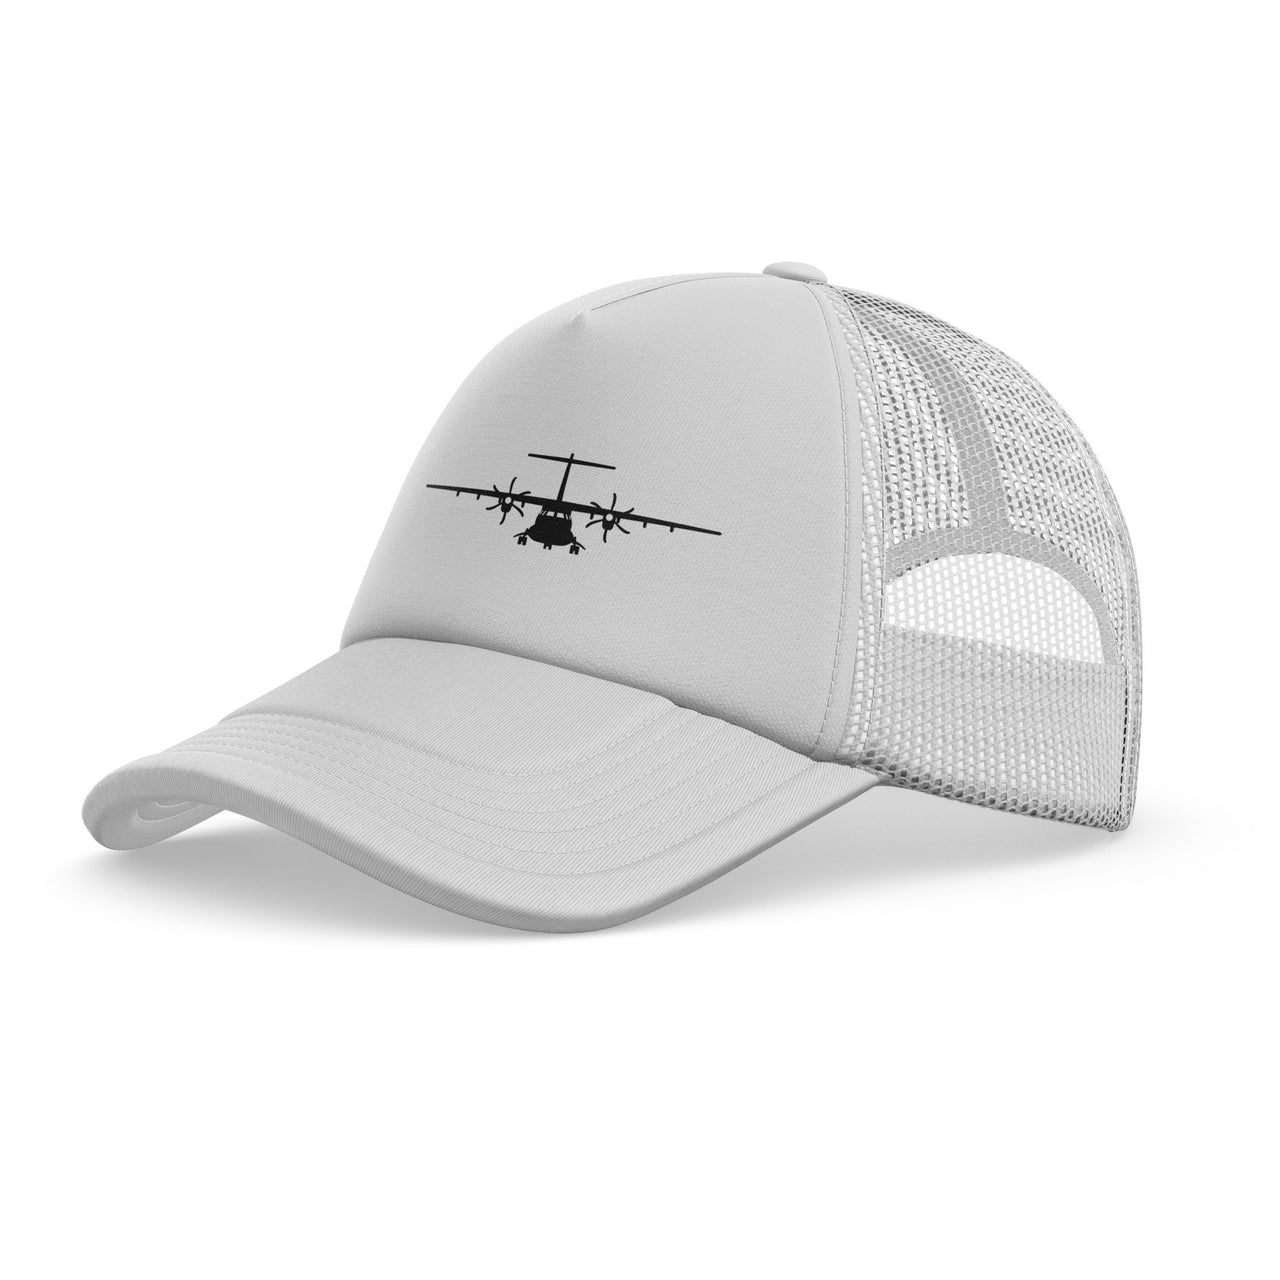 ATR-72 Silhouette Designed Trucker Caps & Hats